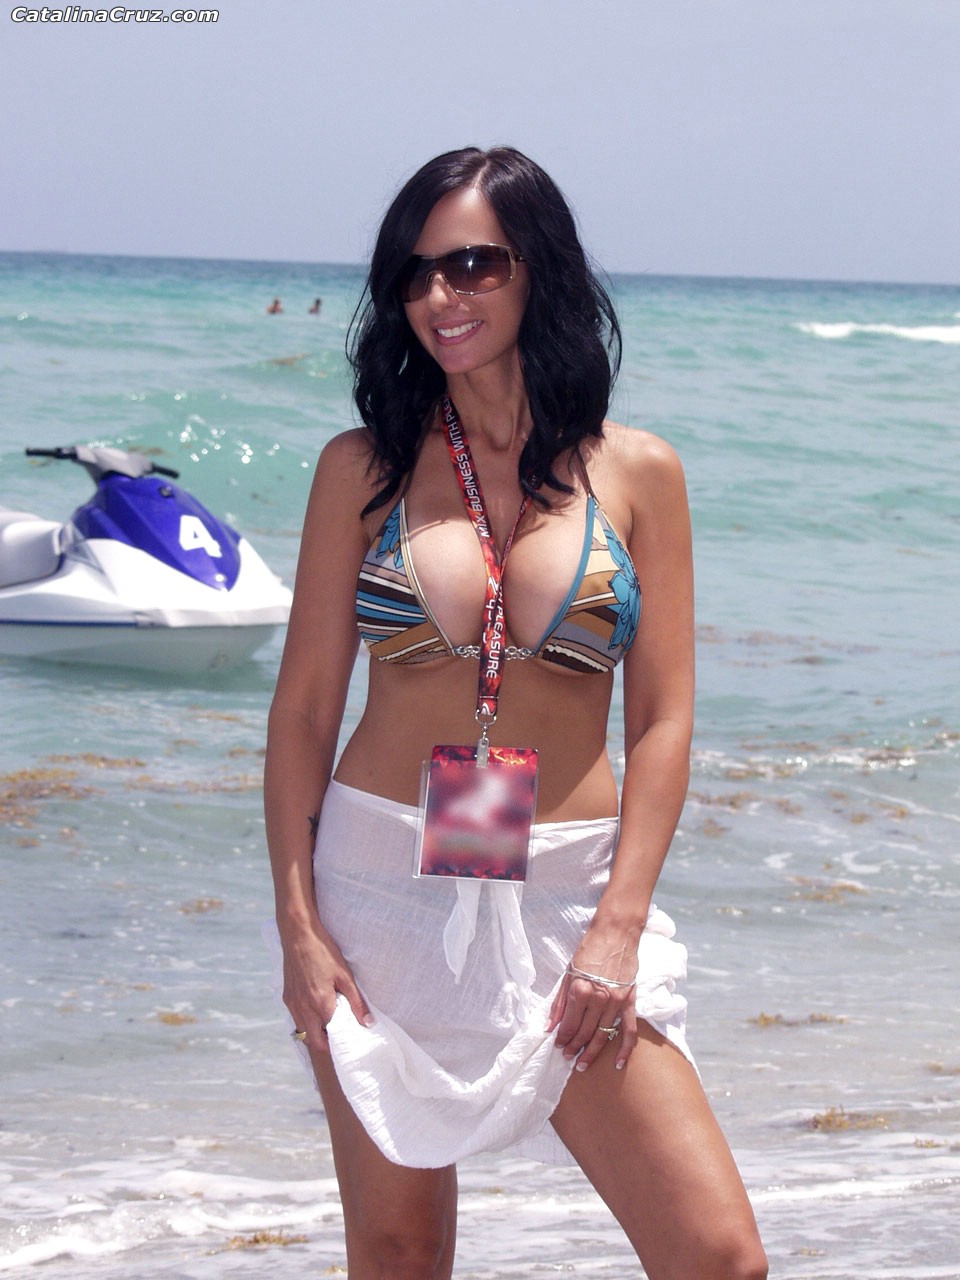 Charming pornstar Catalina Cruz posing in her sexy bikini and nude on vacation 色情照片 #424533759 | Catalina Cruz Pics, Catalina Cruz, Skirt, 手机色情